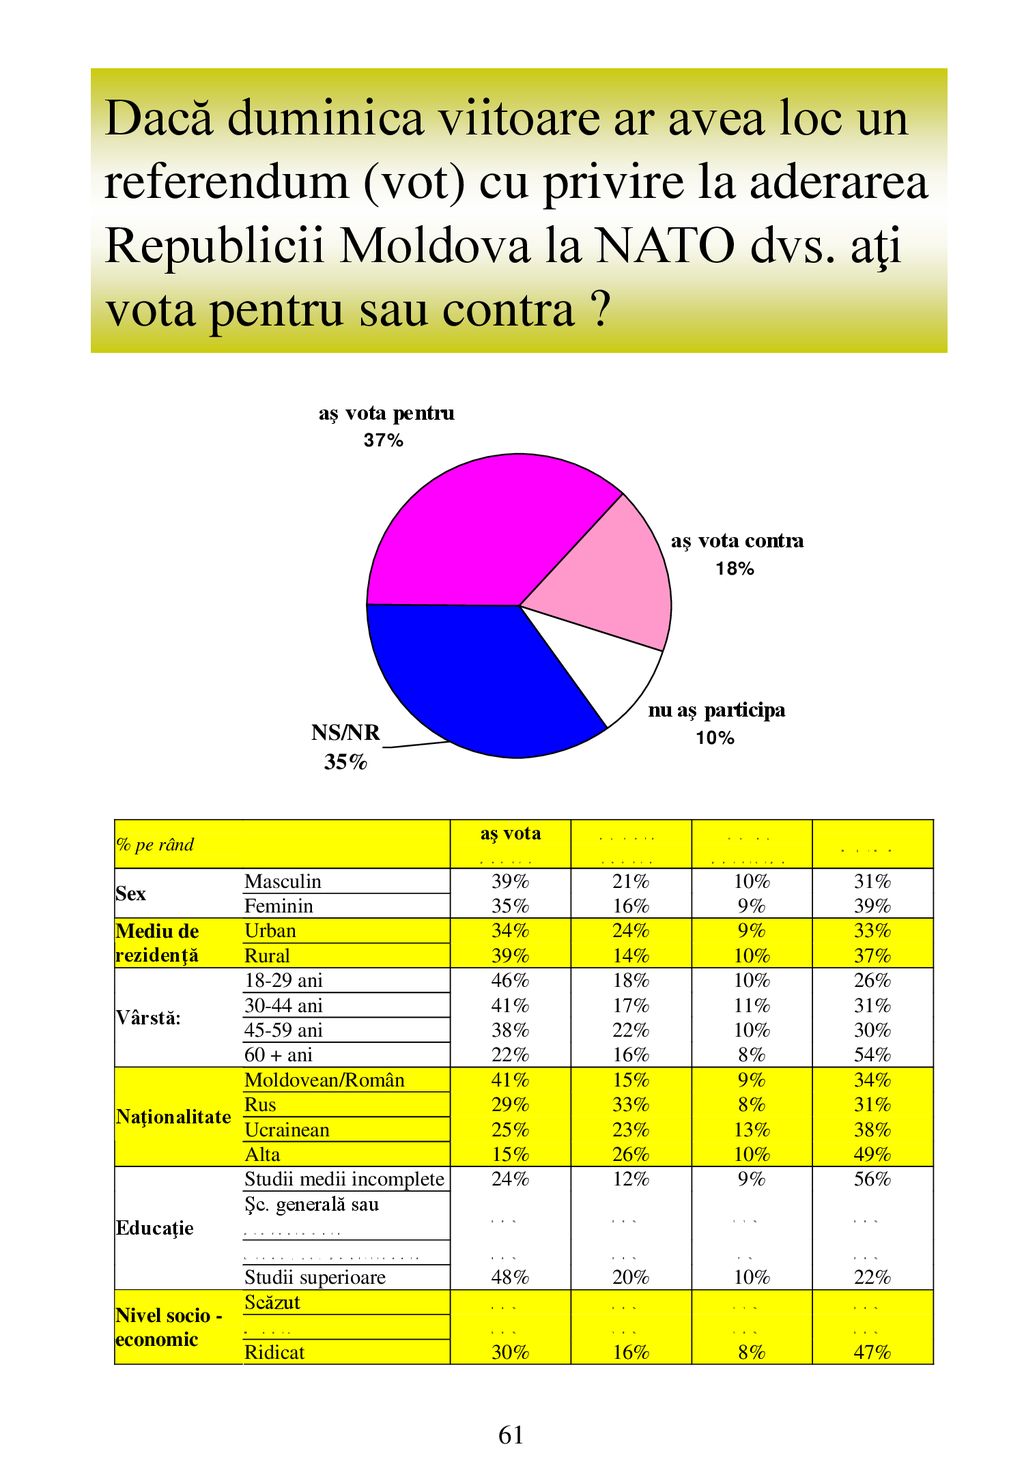 Dacă duminica viitoare ar avea loc un referendum (vot) cu privire la aderarea Republicii Moldova la NATO dvs.